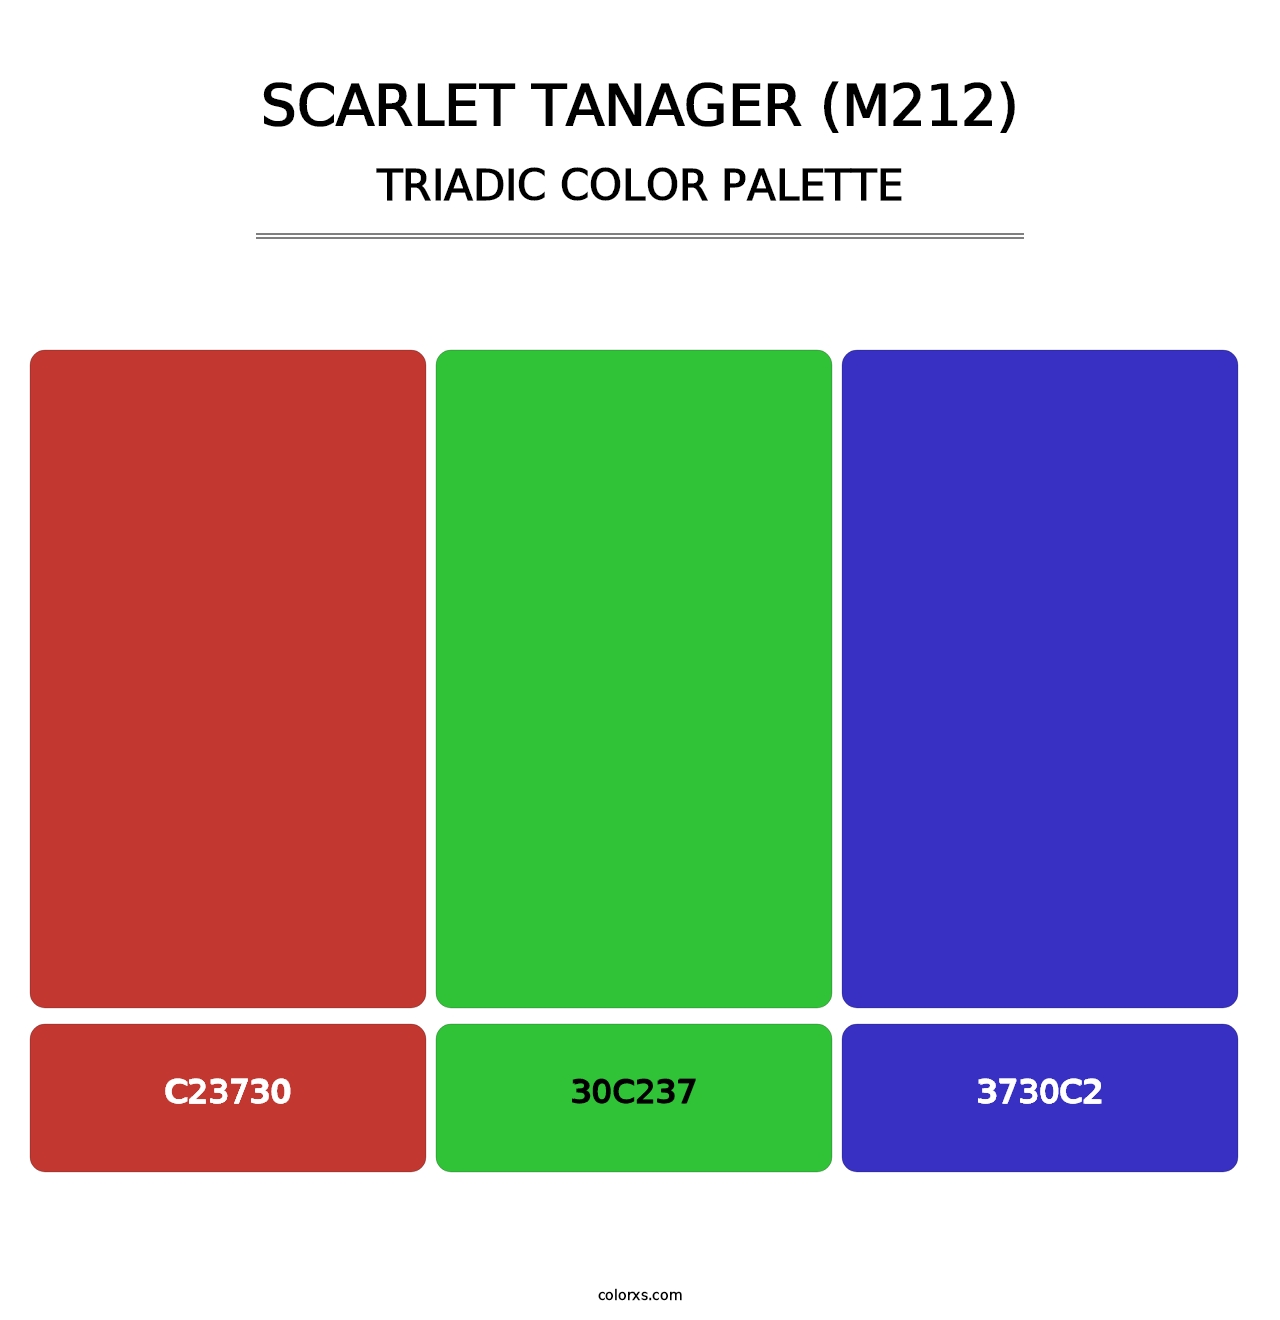 Scarlet Tanager (M212) - Triadic Color Palette